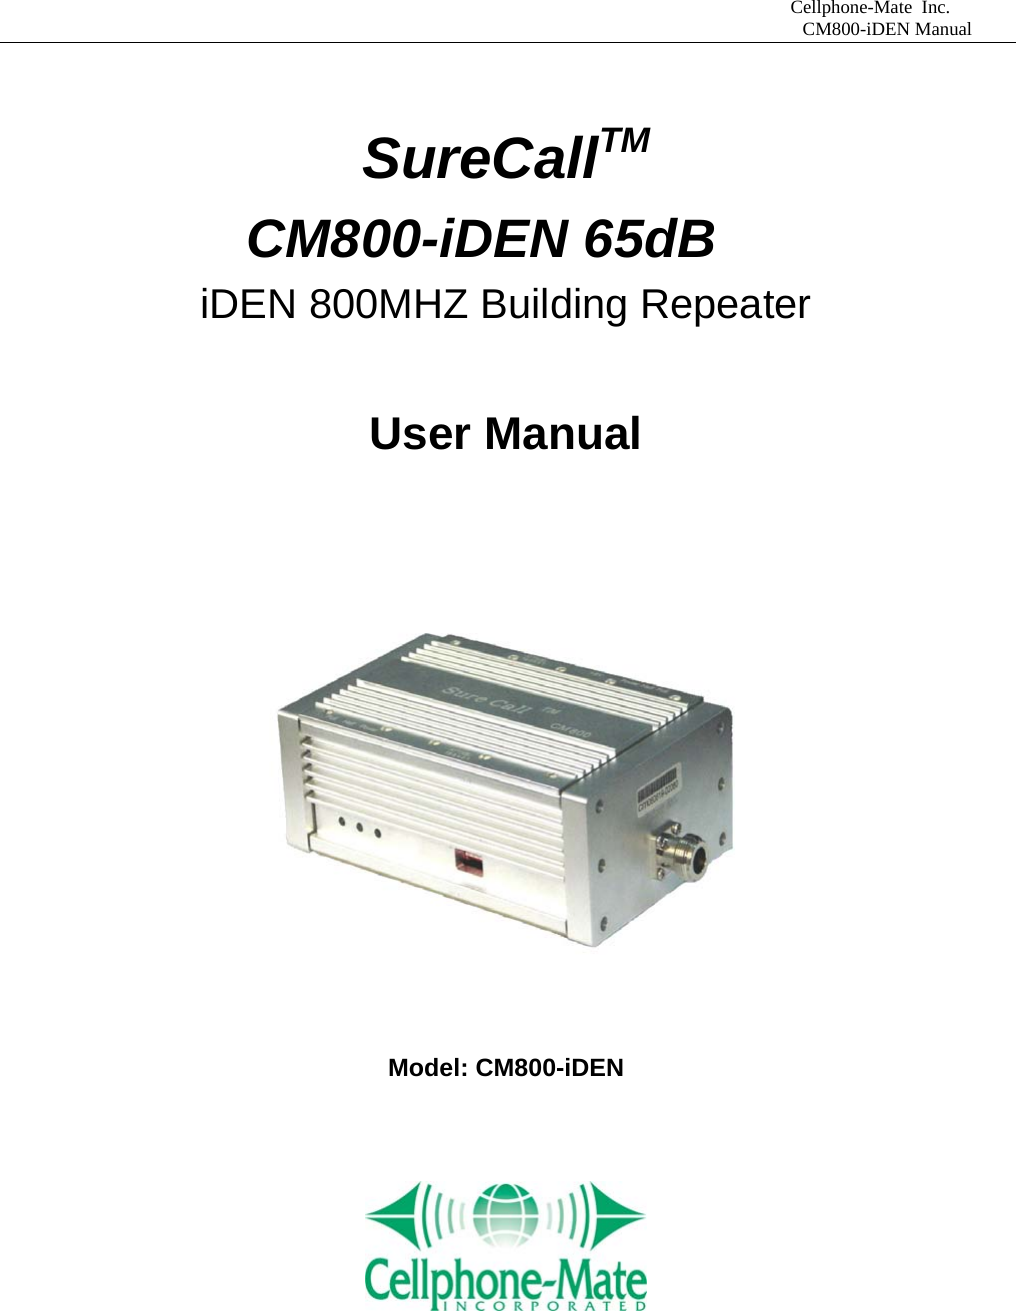                              Cellphone-Mate Inc.                                                                                  CM800-iDEN Manual  SureCallTM          CM800-iDEN 65dB iDEN 800MHZ Building Repeater  User Manual     Model: CM800-iDEN         